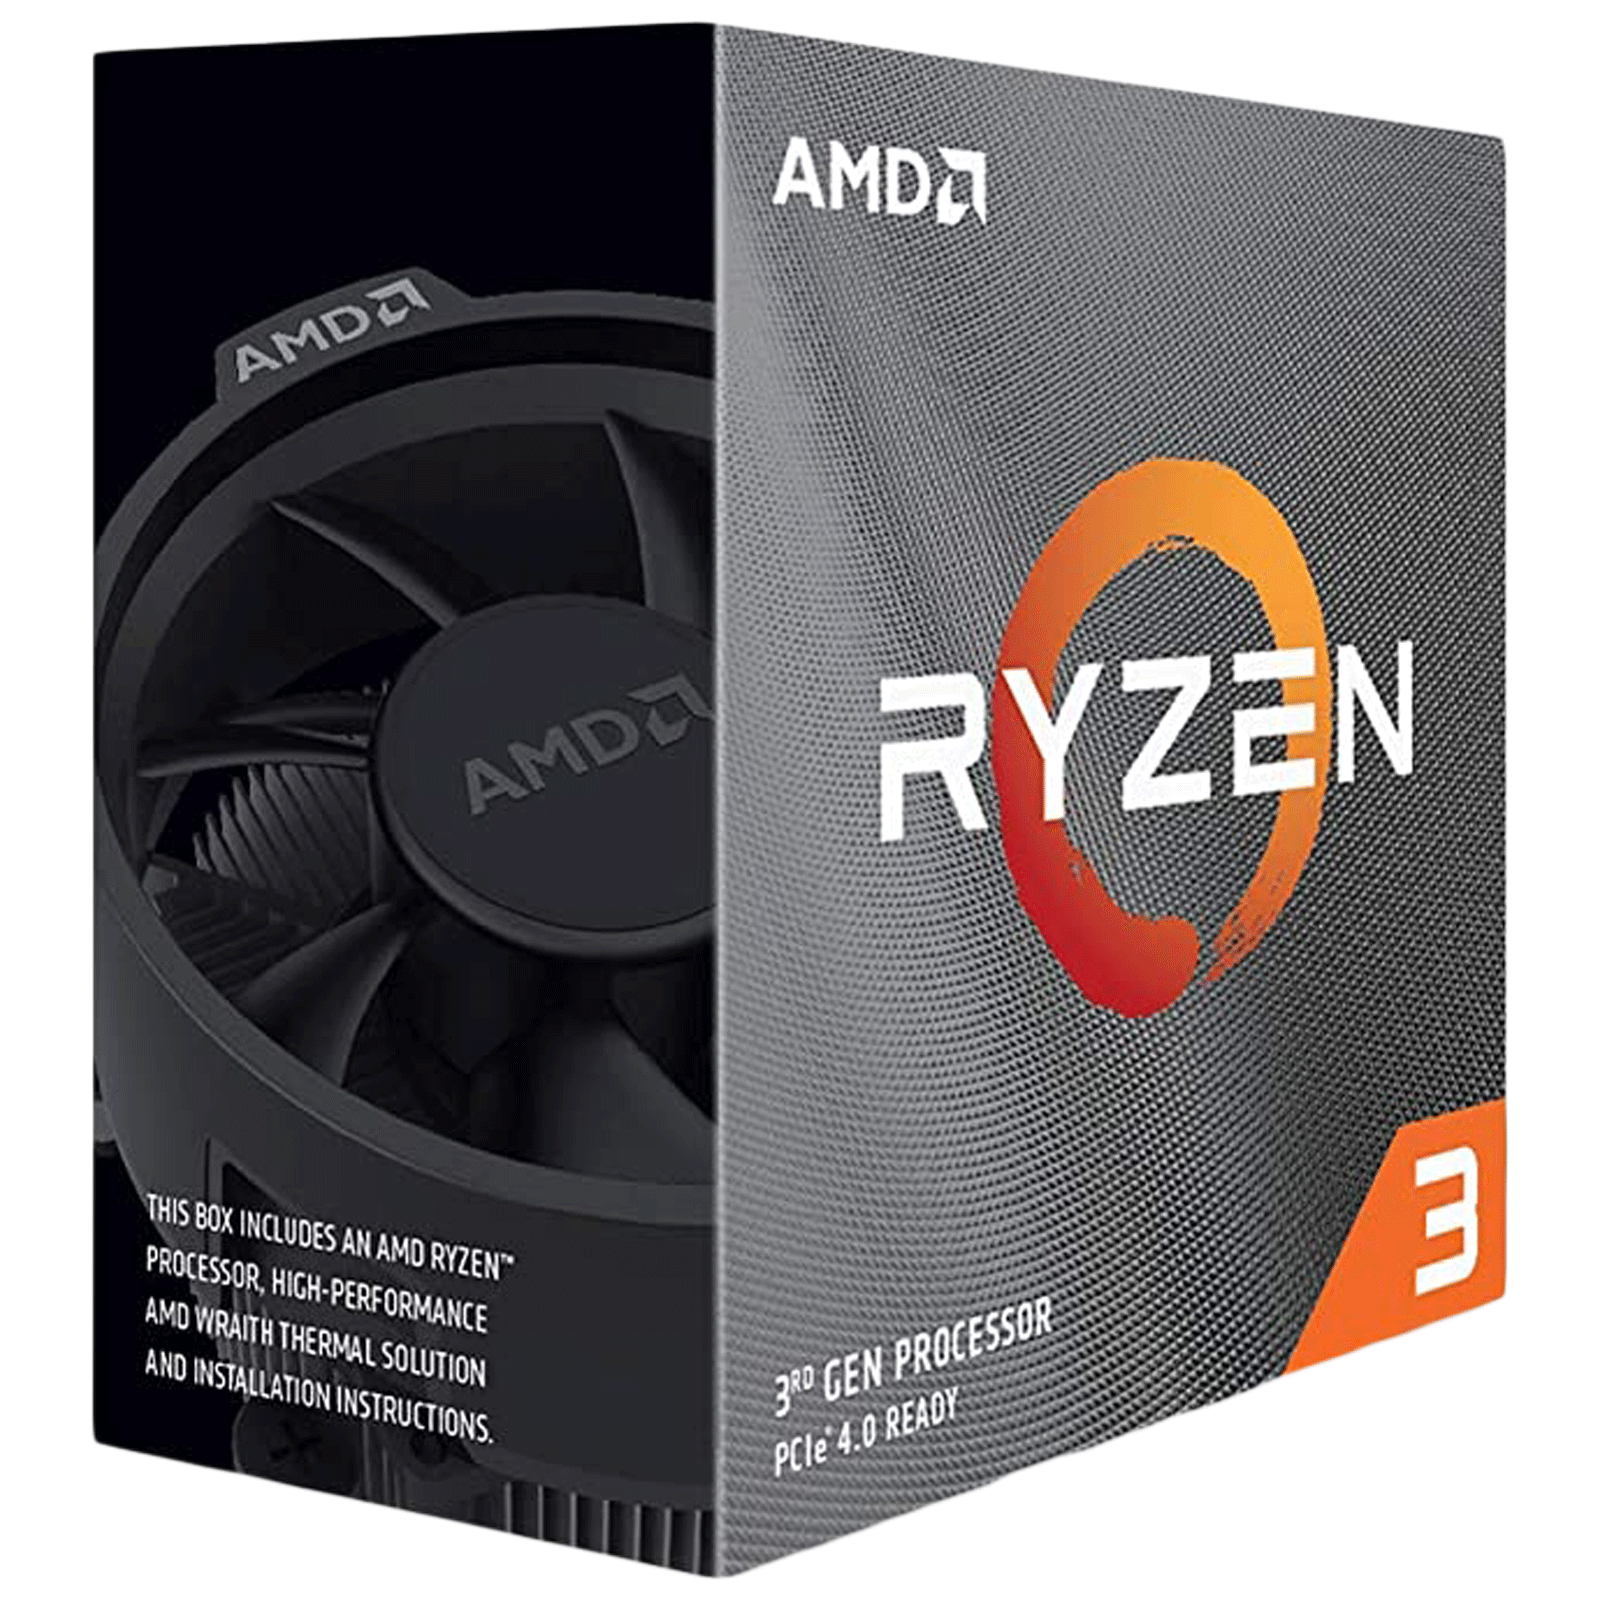 AMD Ryzen 3 Desktop Processor (4 Cores, 3.8 GHz, Fine Tuned For AAA Gaming, 3300X, Silver)_1